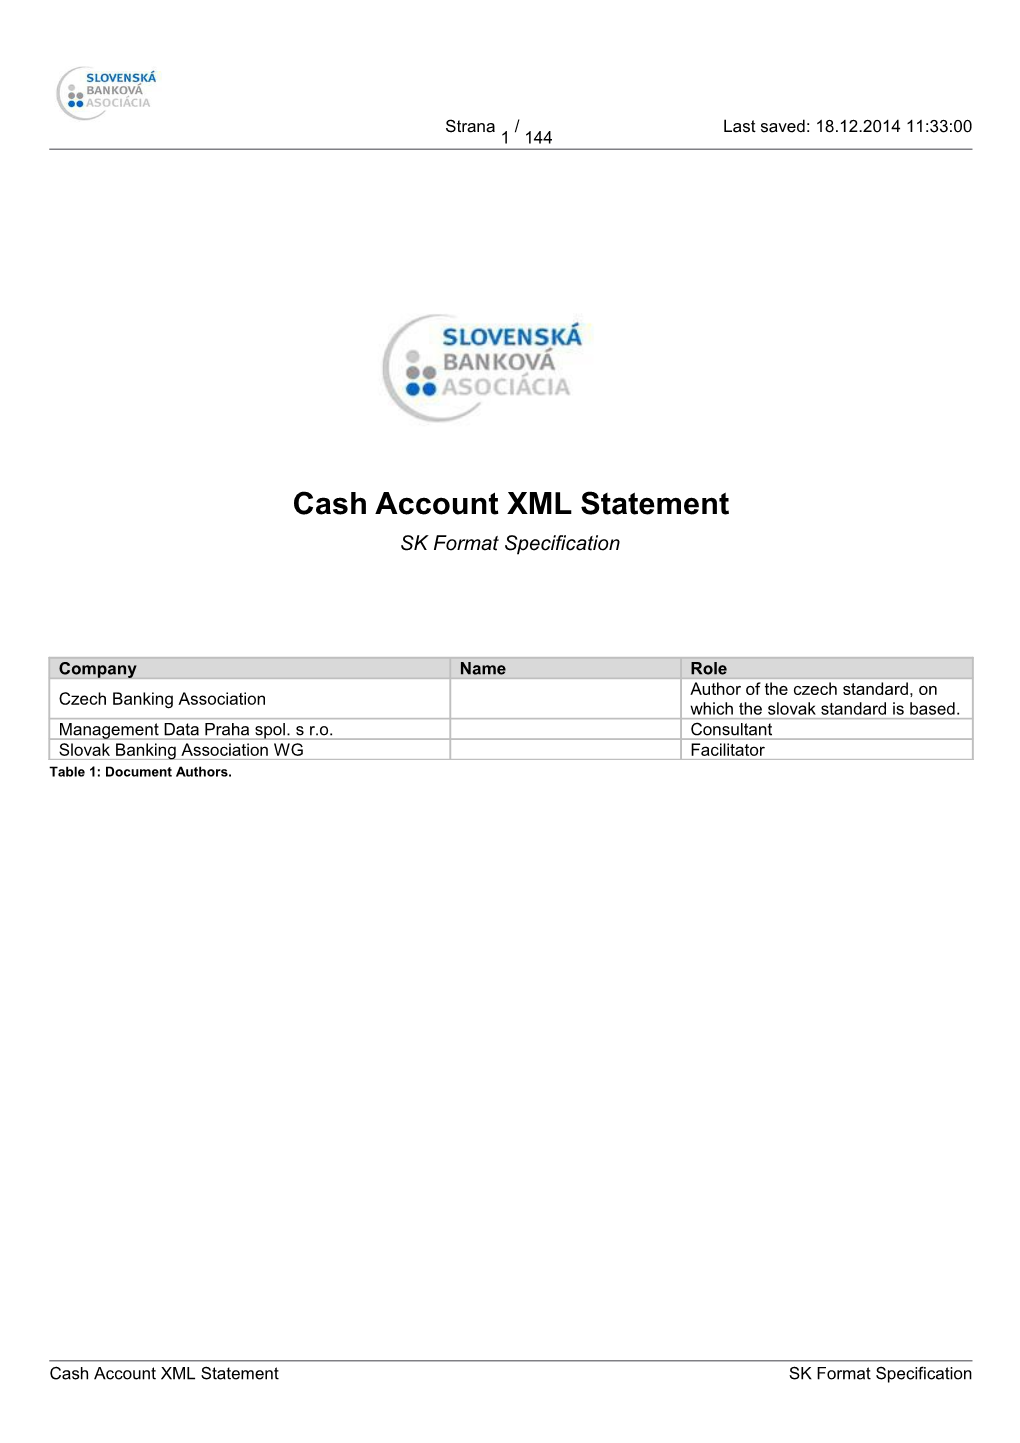 Cash Account XML Statement